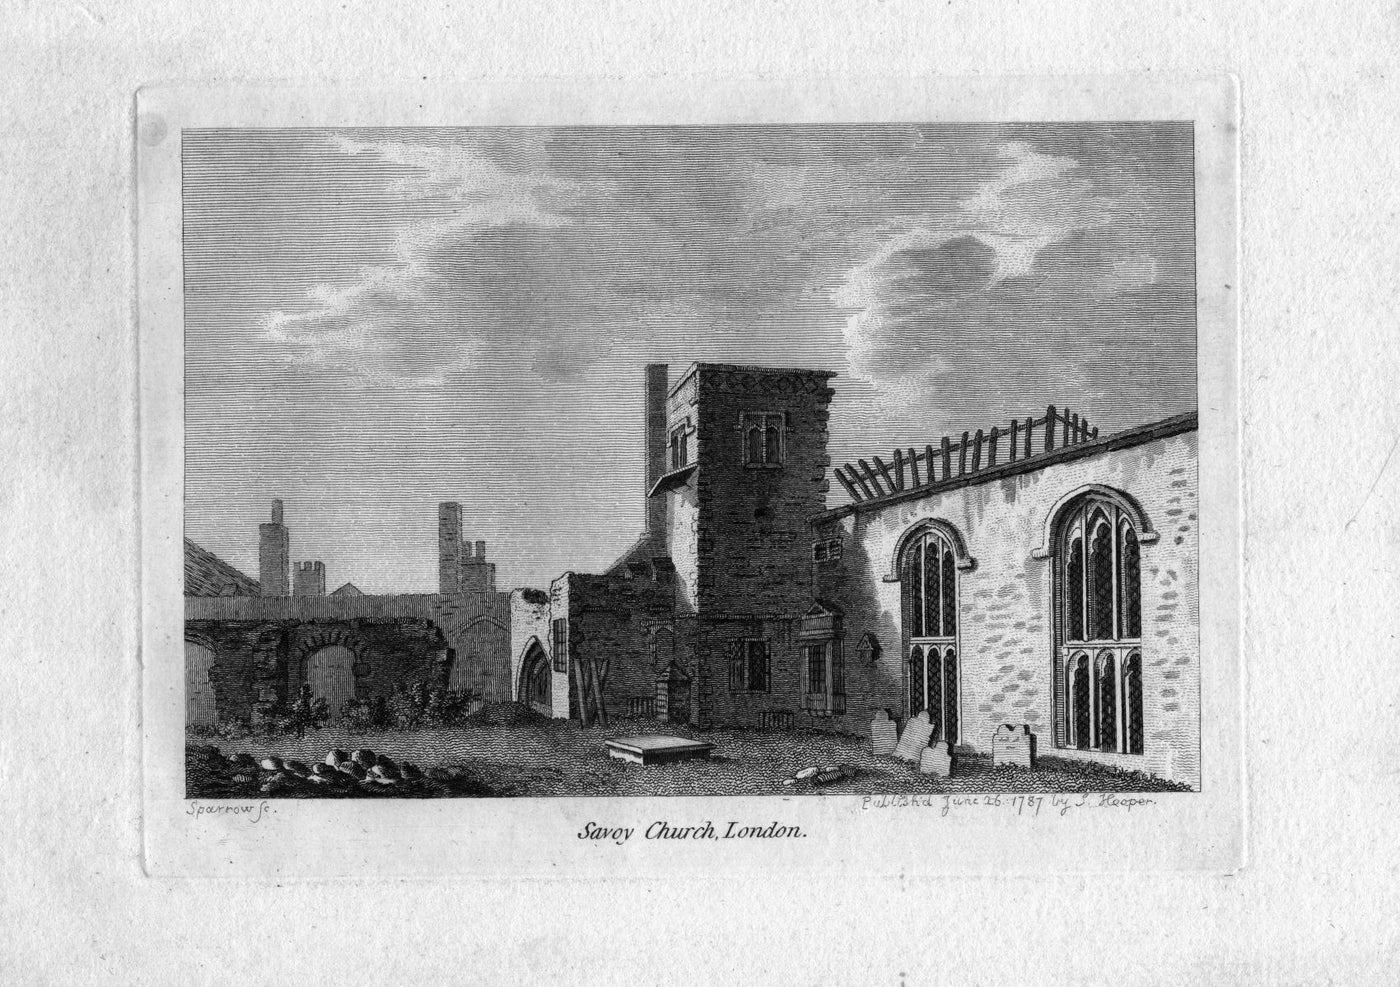 Savoy Church London antique print dated 1787